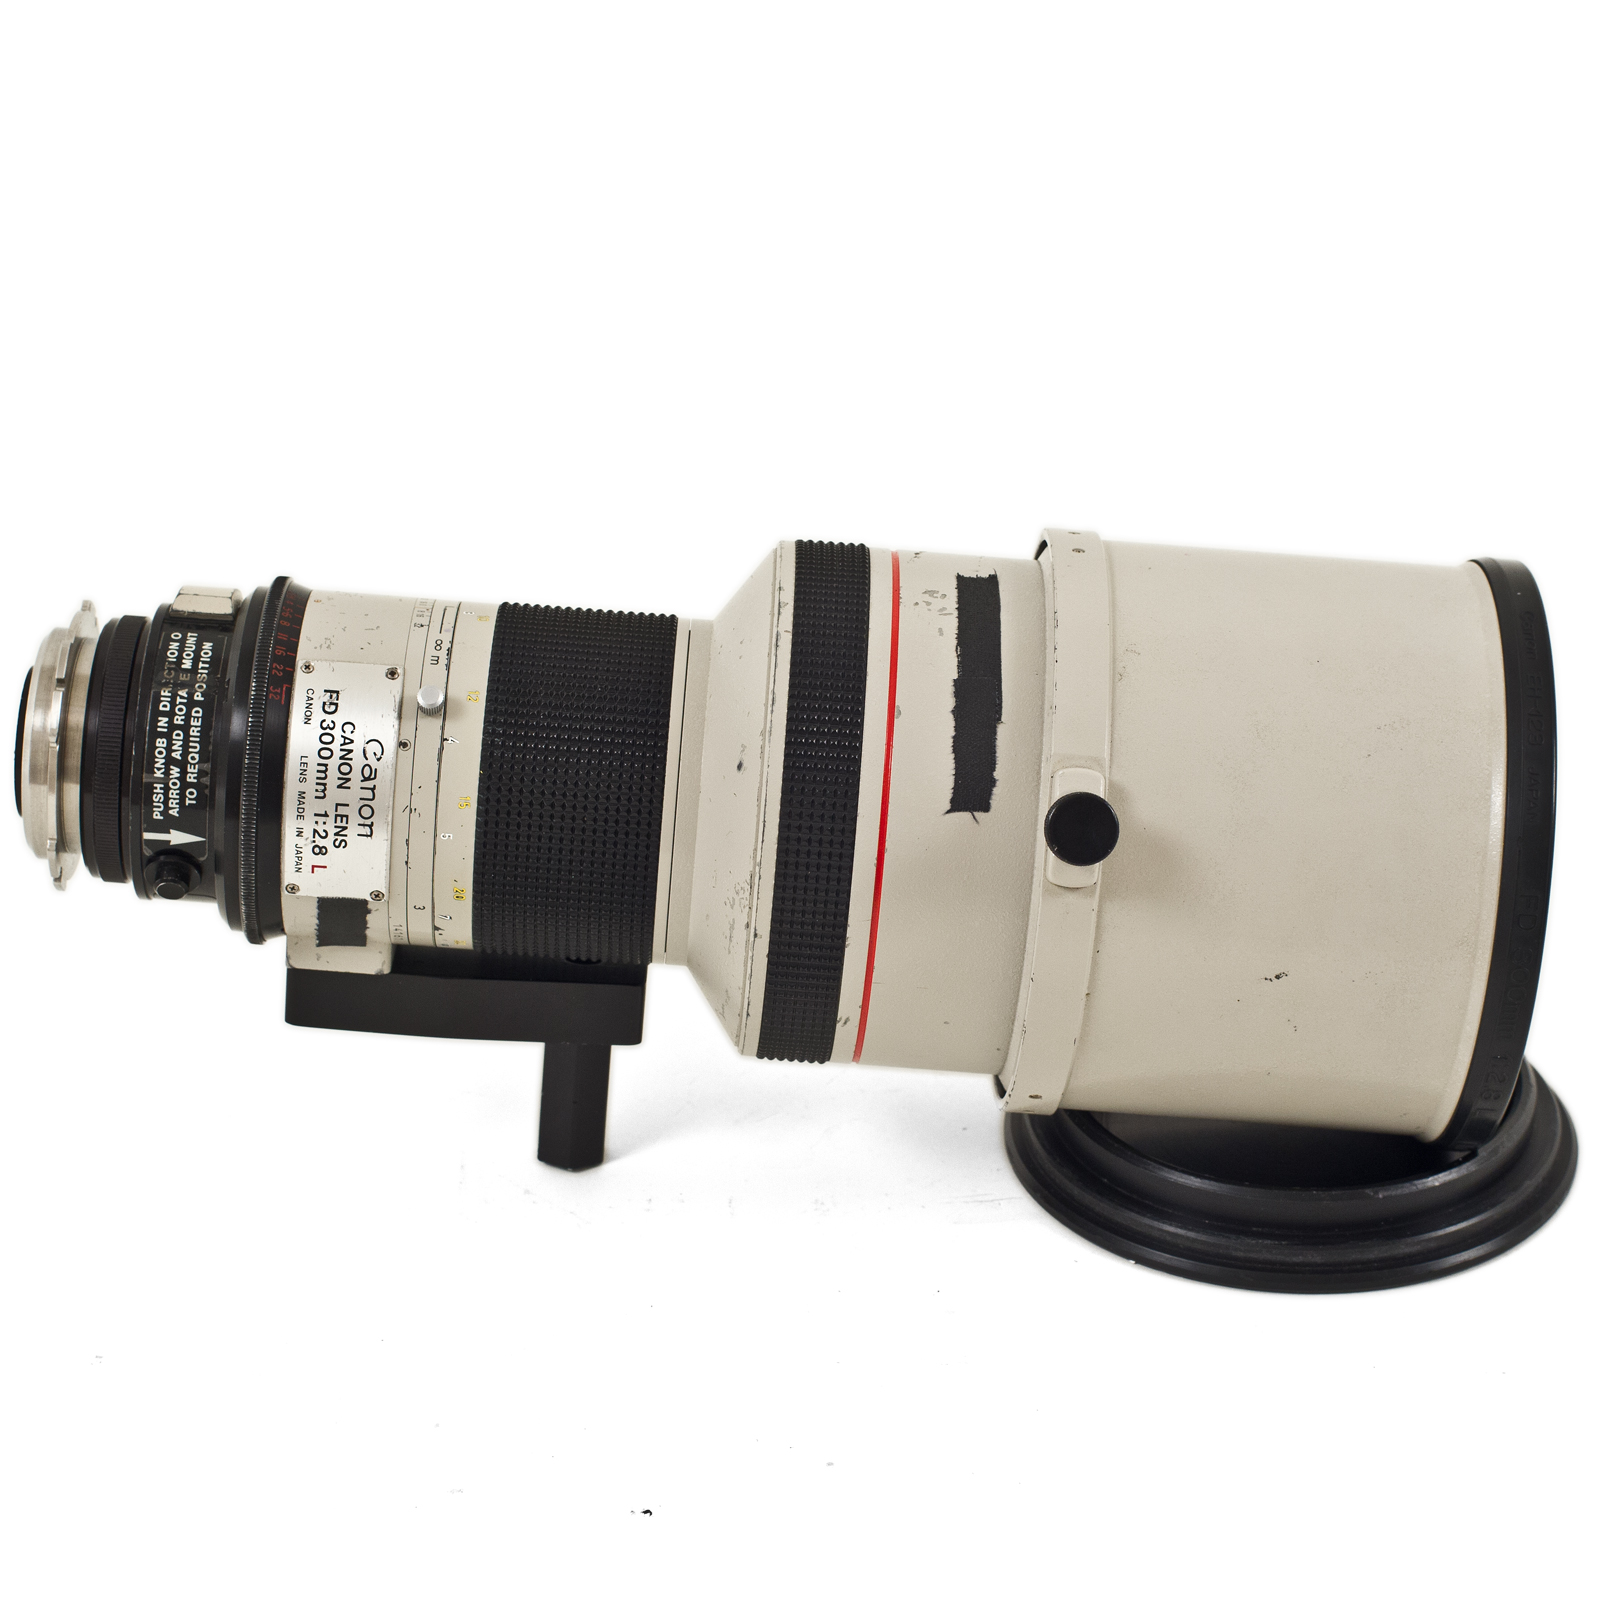 300mm T2.8 Canon Telephoto Lens